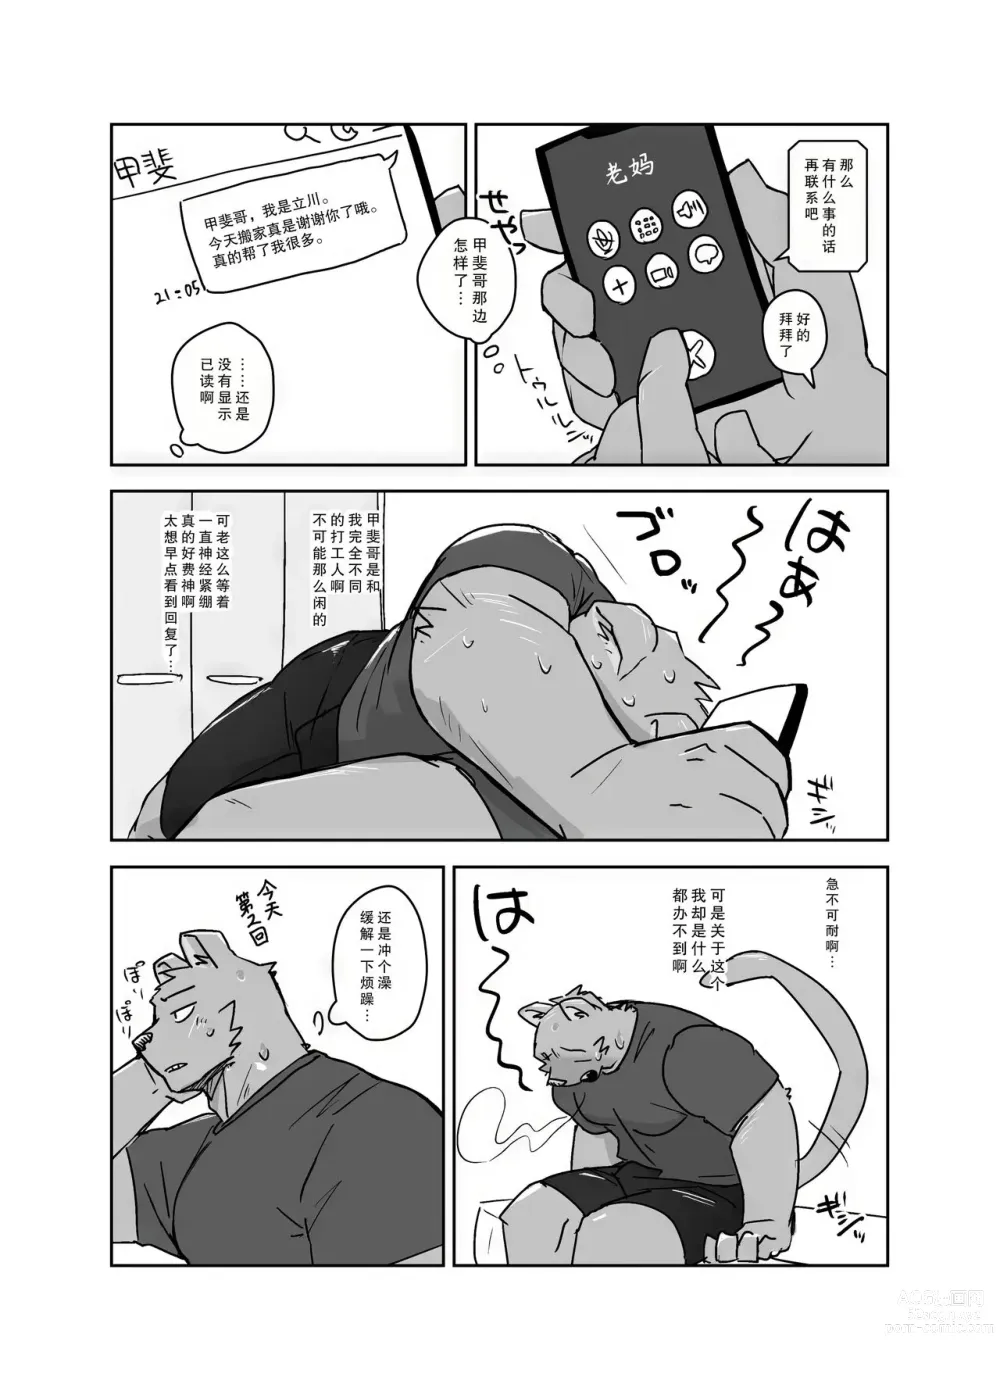 Page 7 of manga 【后续漫画】那一天的夜晚